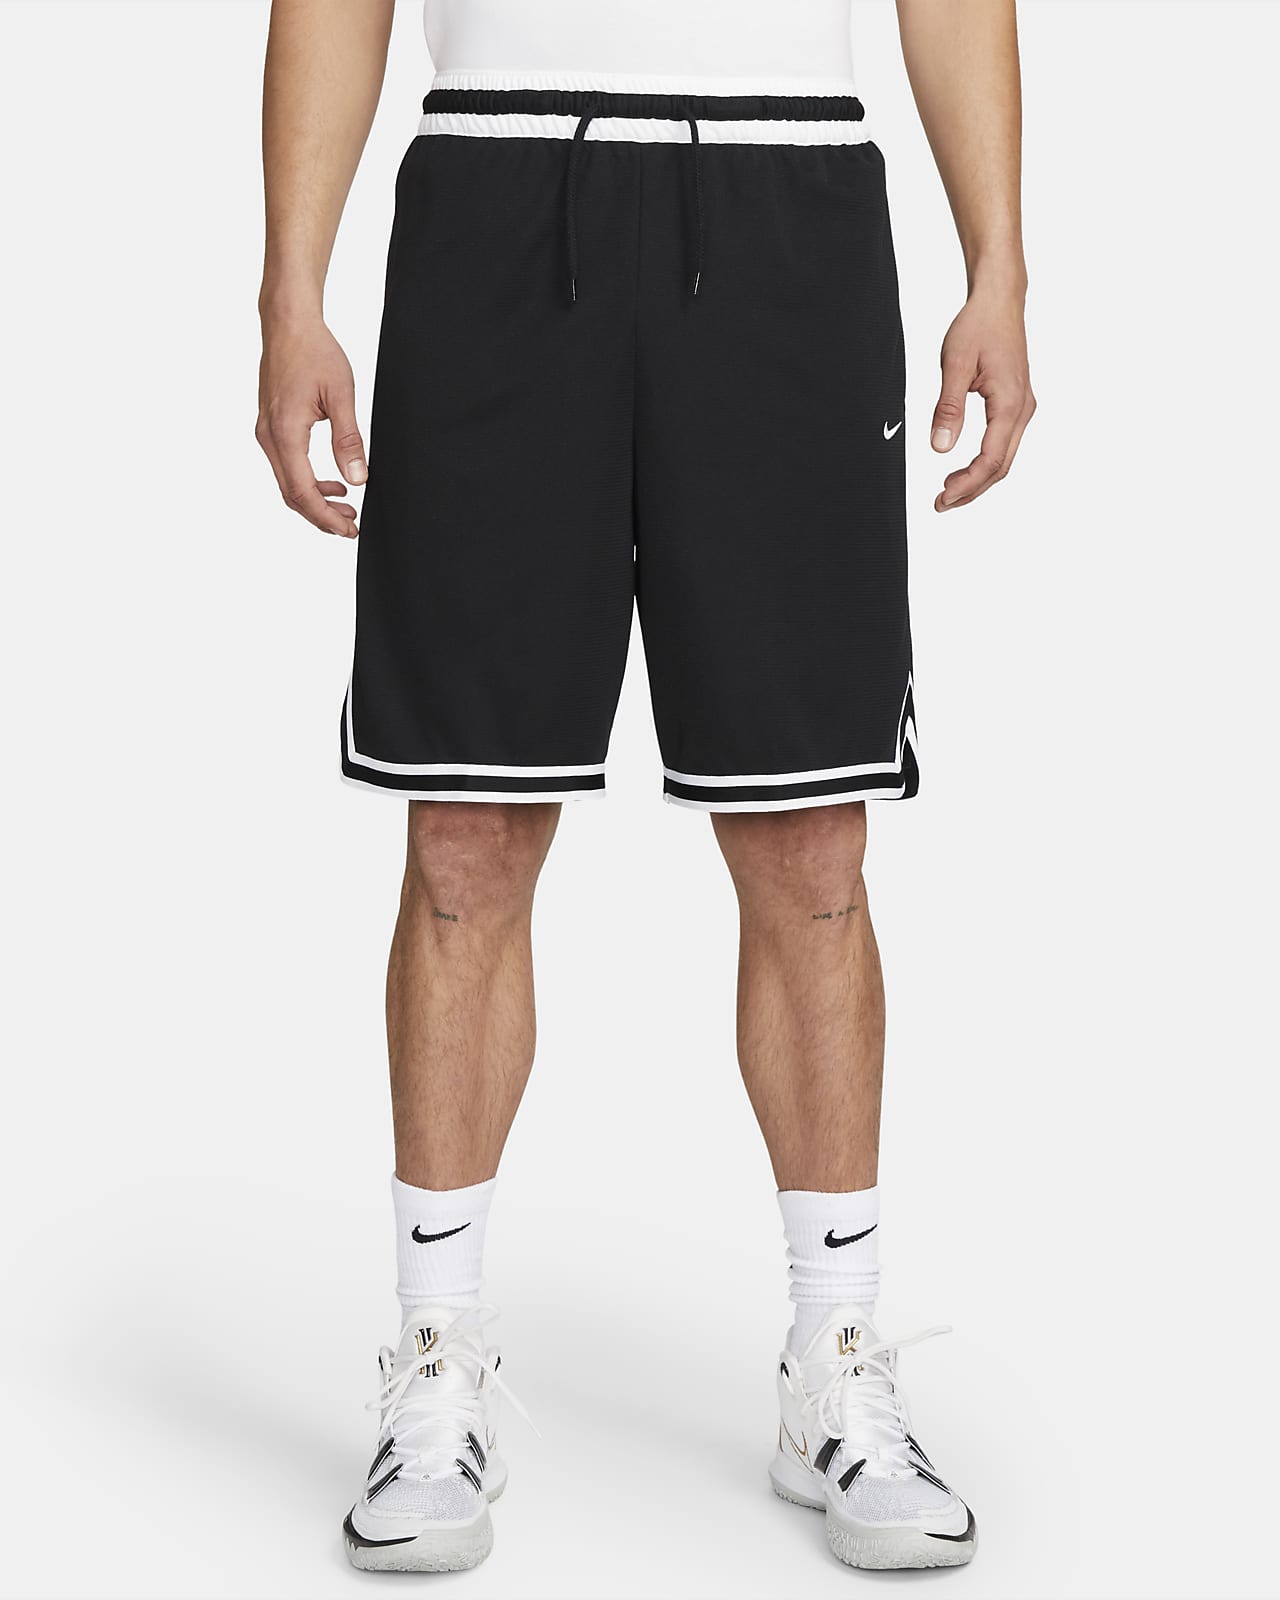 2XL Nike Basketball Shorts 2 Pair